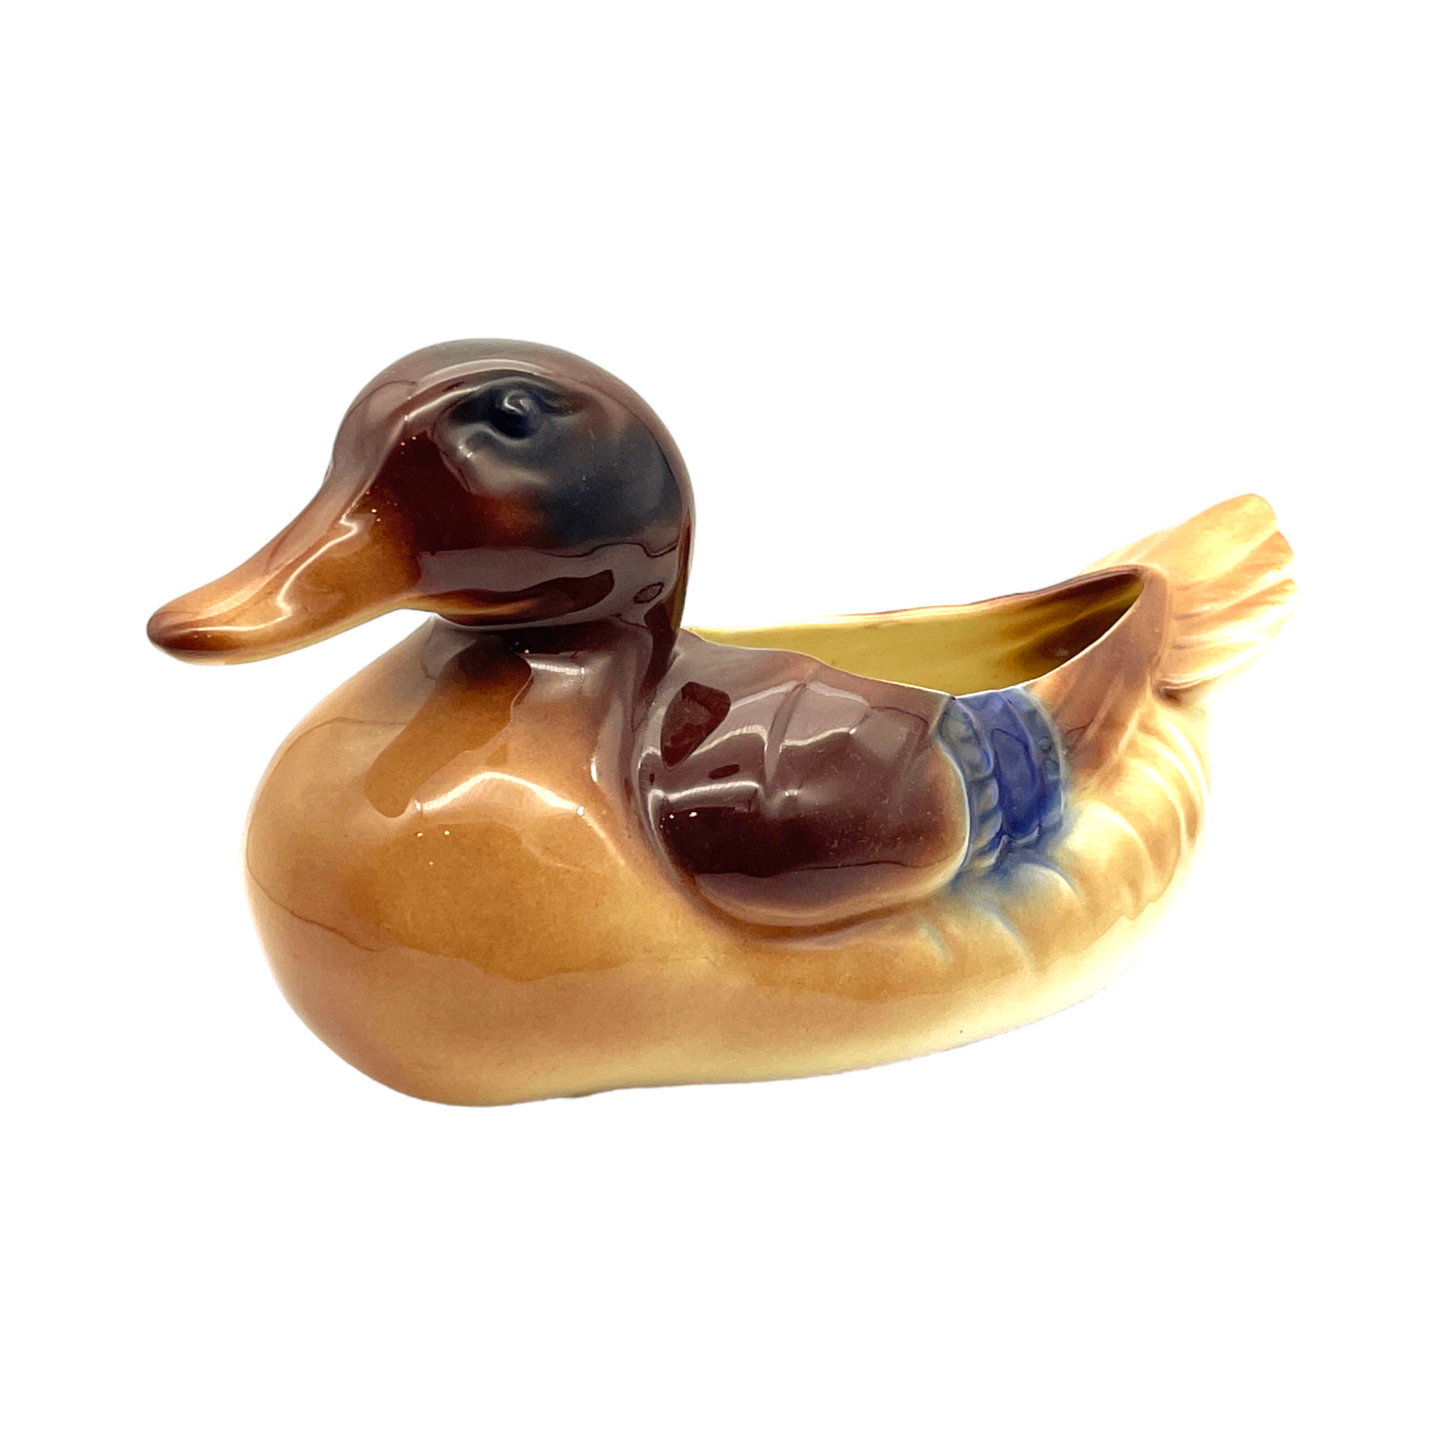 Royal Copley - Sitting Duck Planter - Vintage - 4.5"